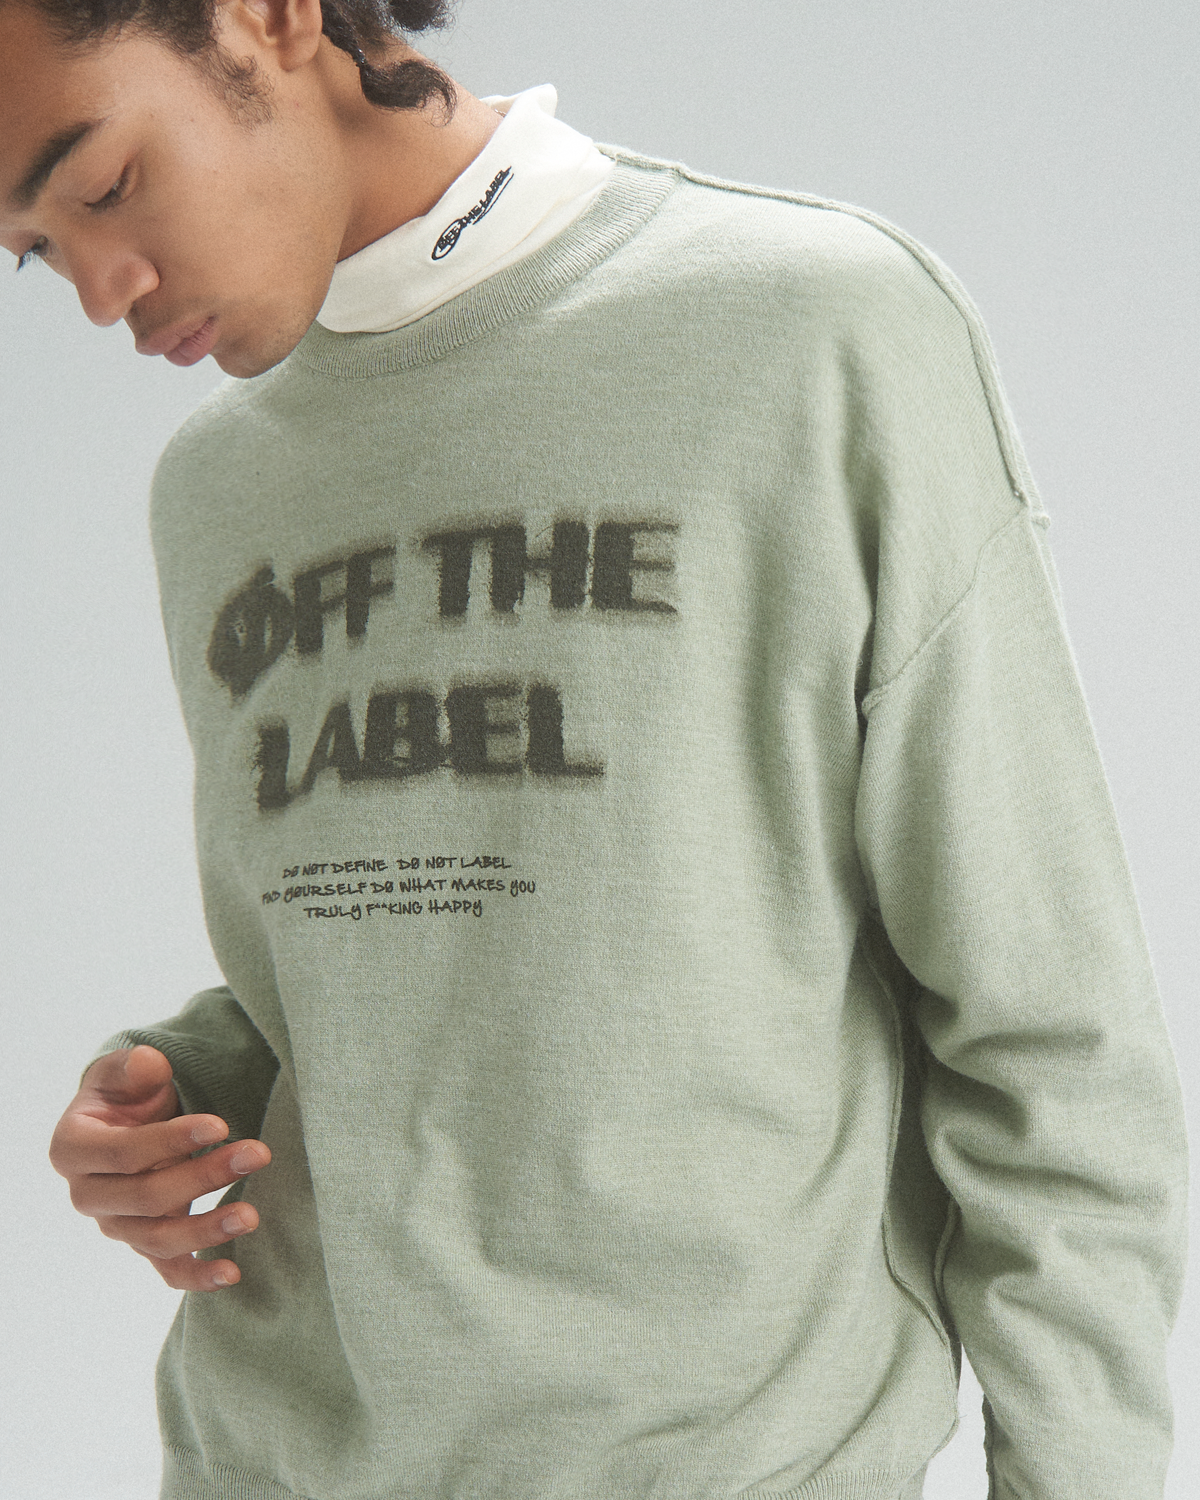 Off The Label breeze knit jumper green